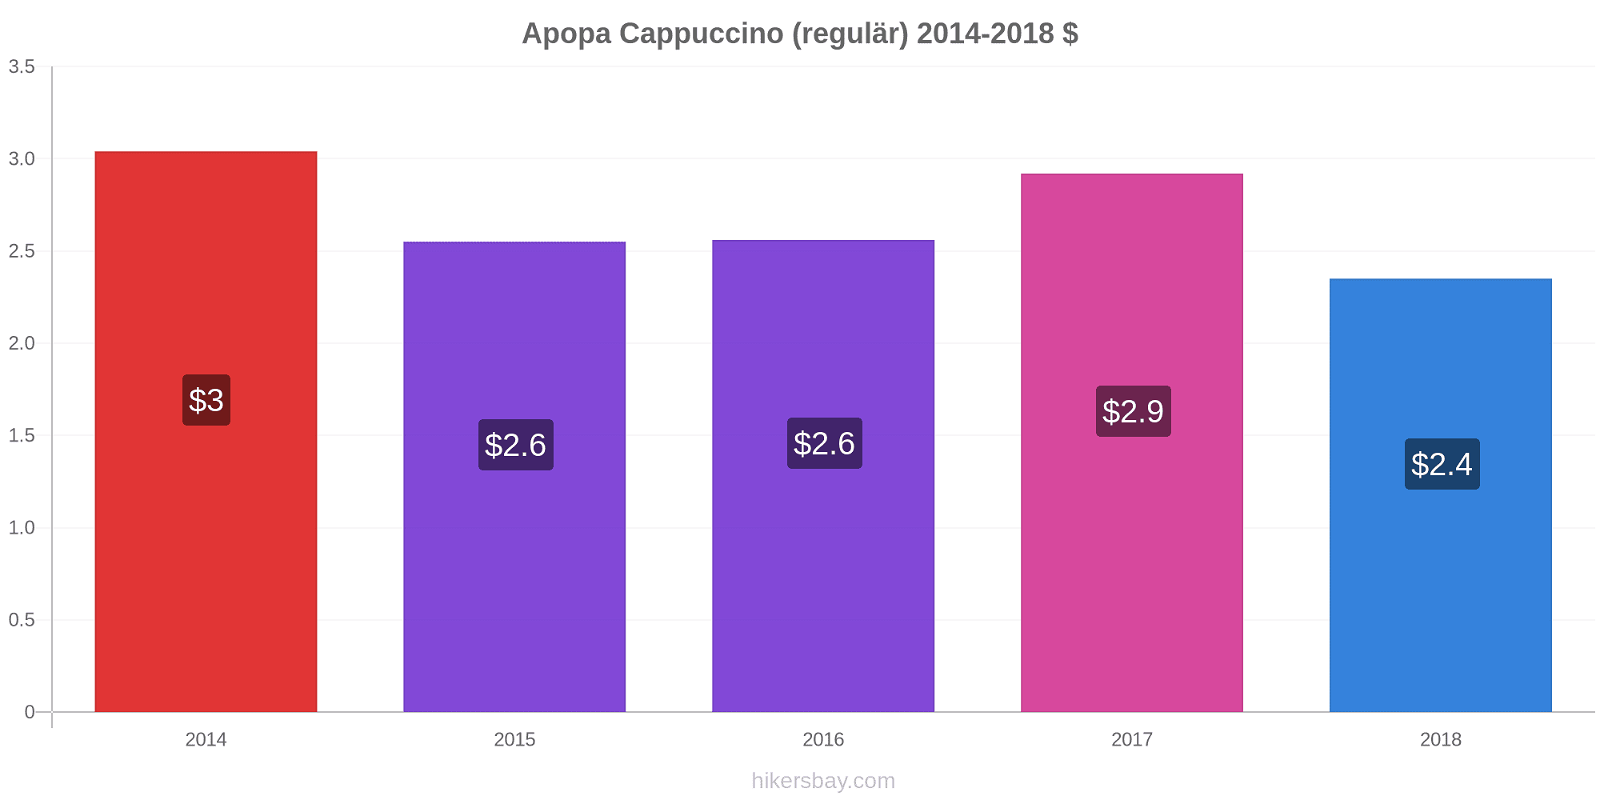 Apopa Preisänderungen Cappuccino (regulär) hikersbay.com